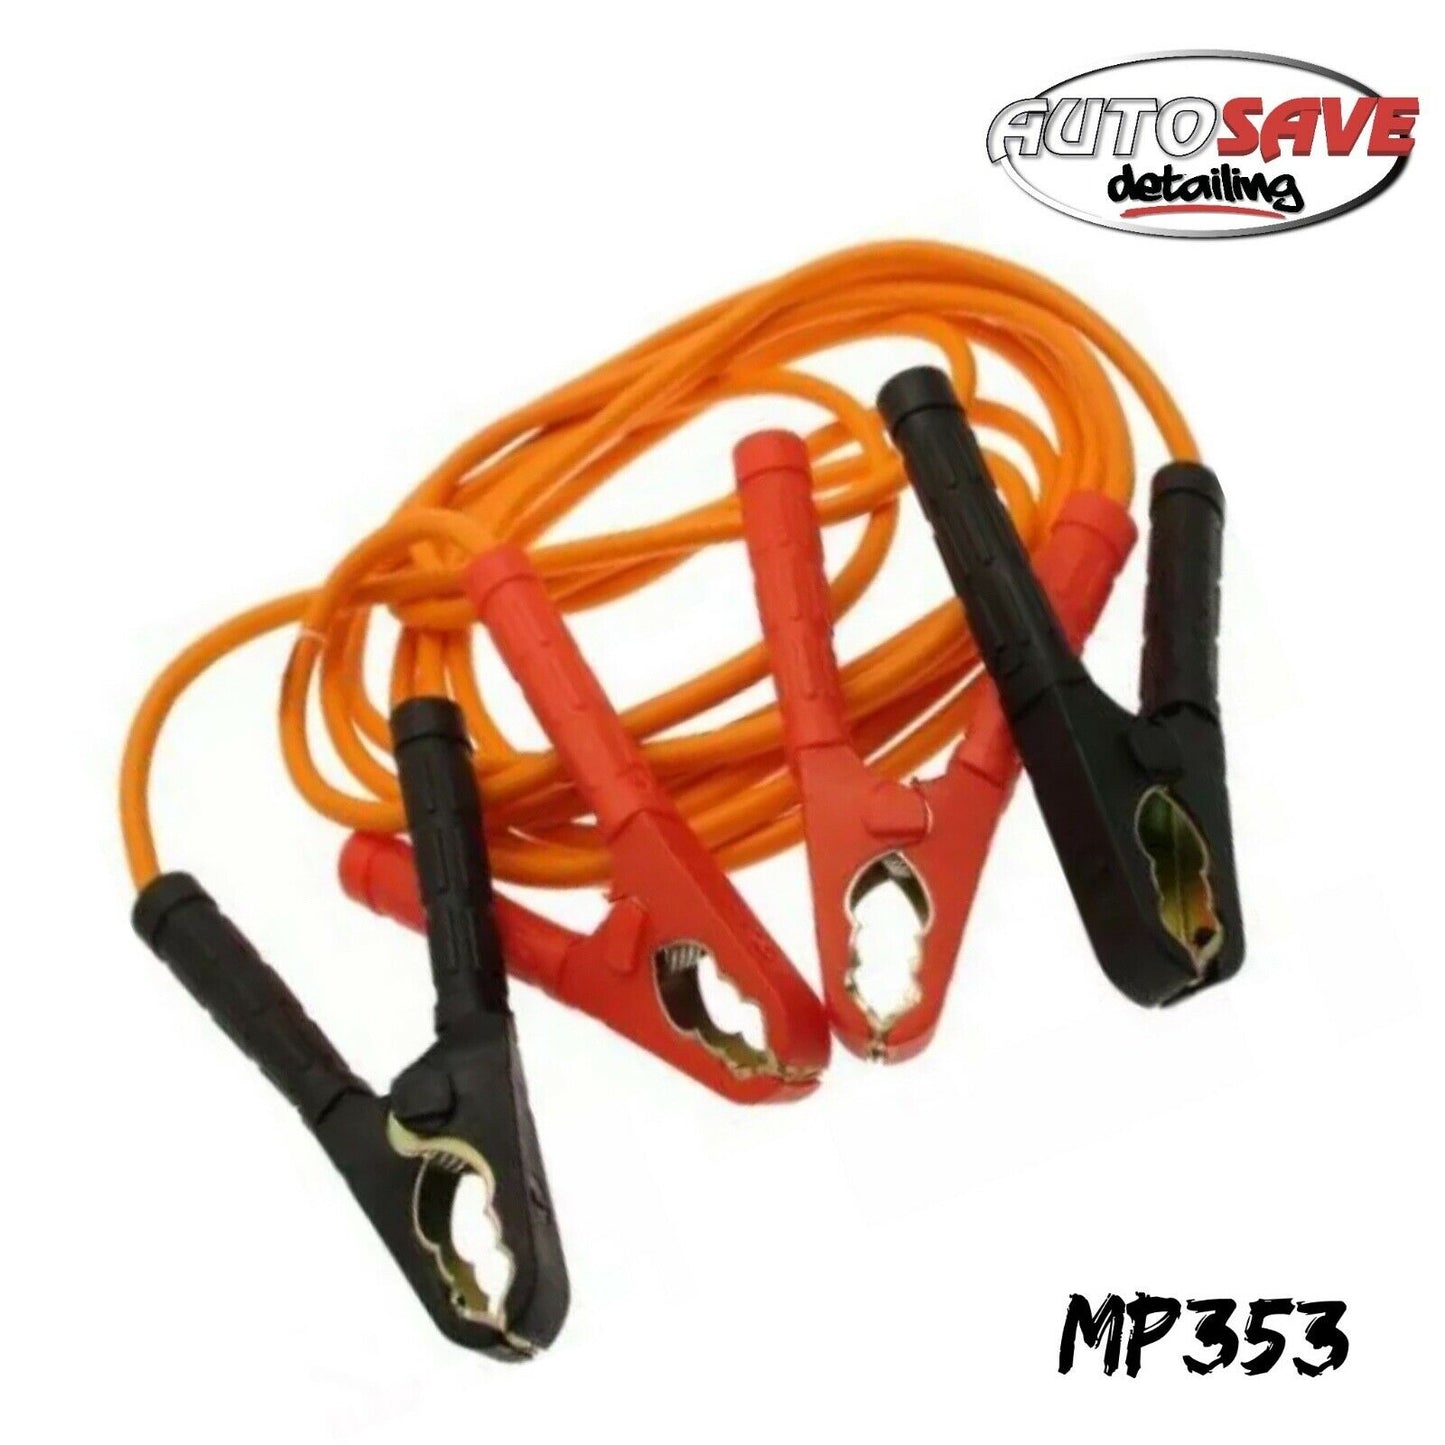 Maypole 353 Copper Booster Cables 20mm x 4m (mp353)